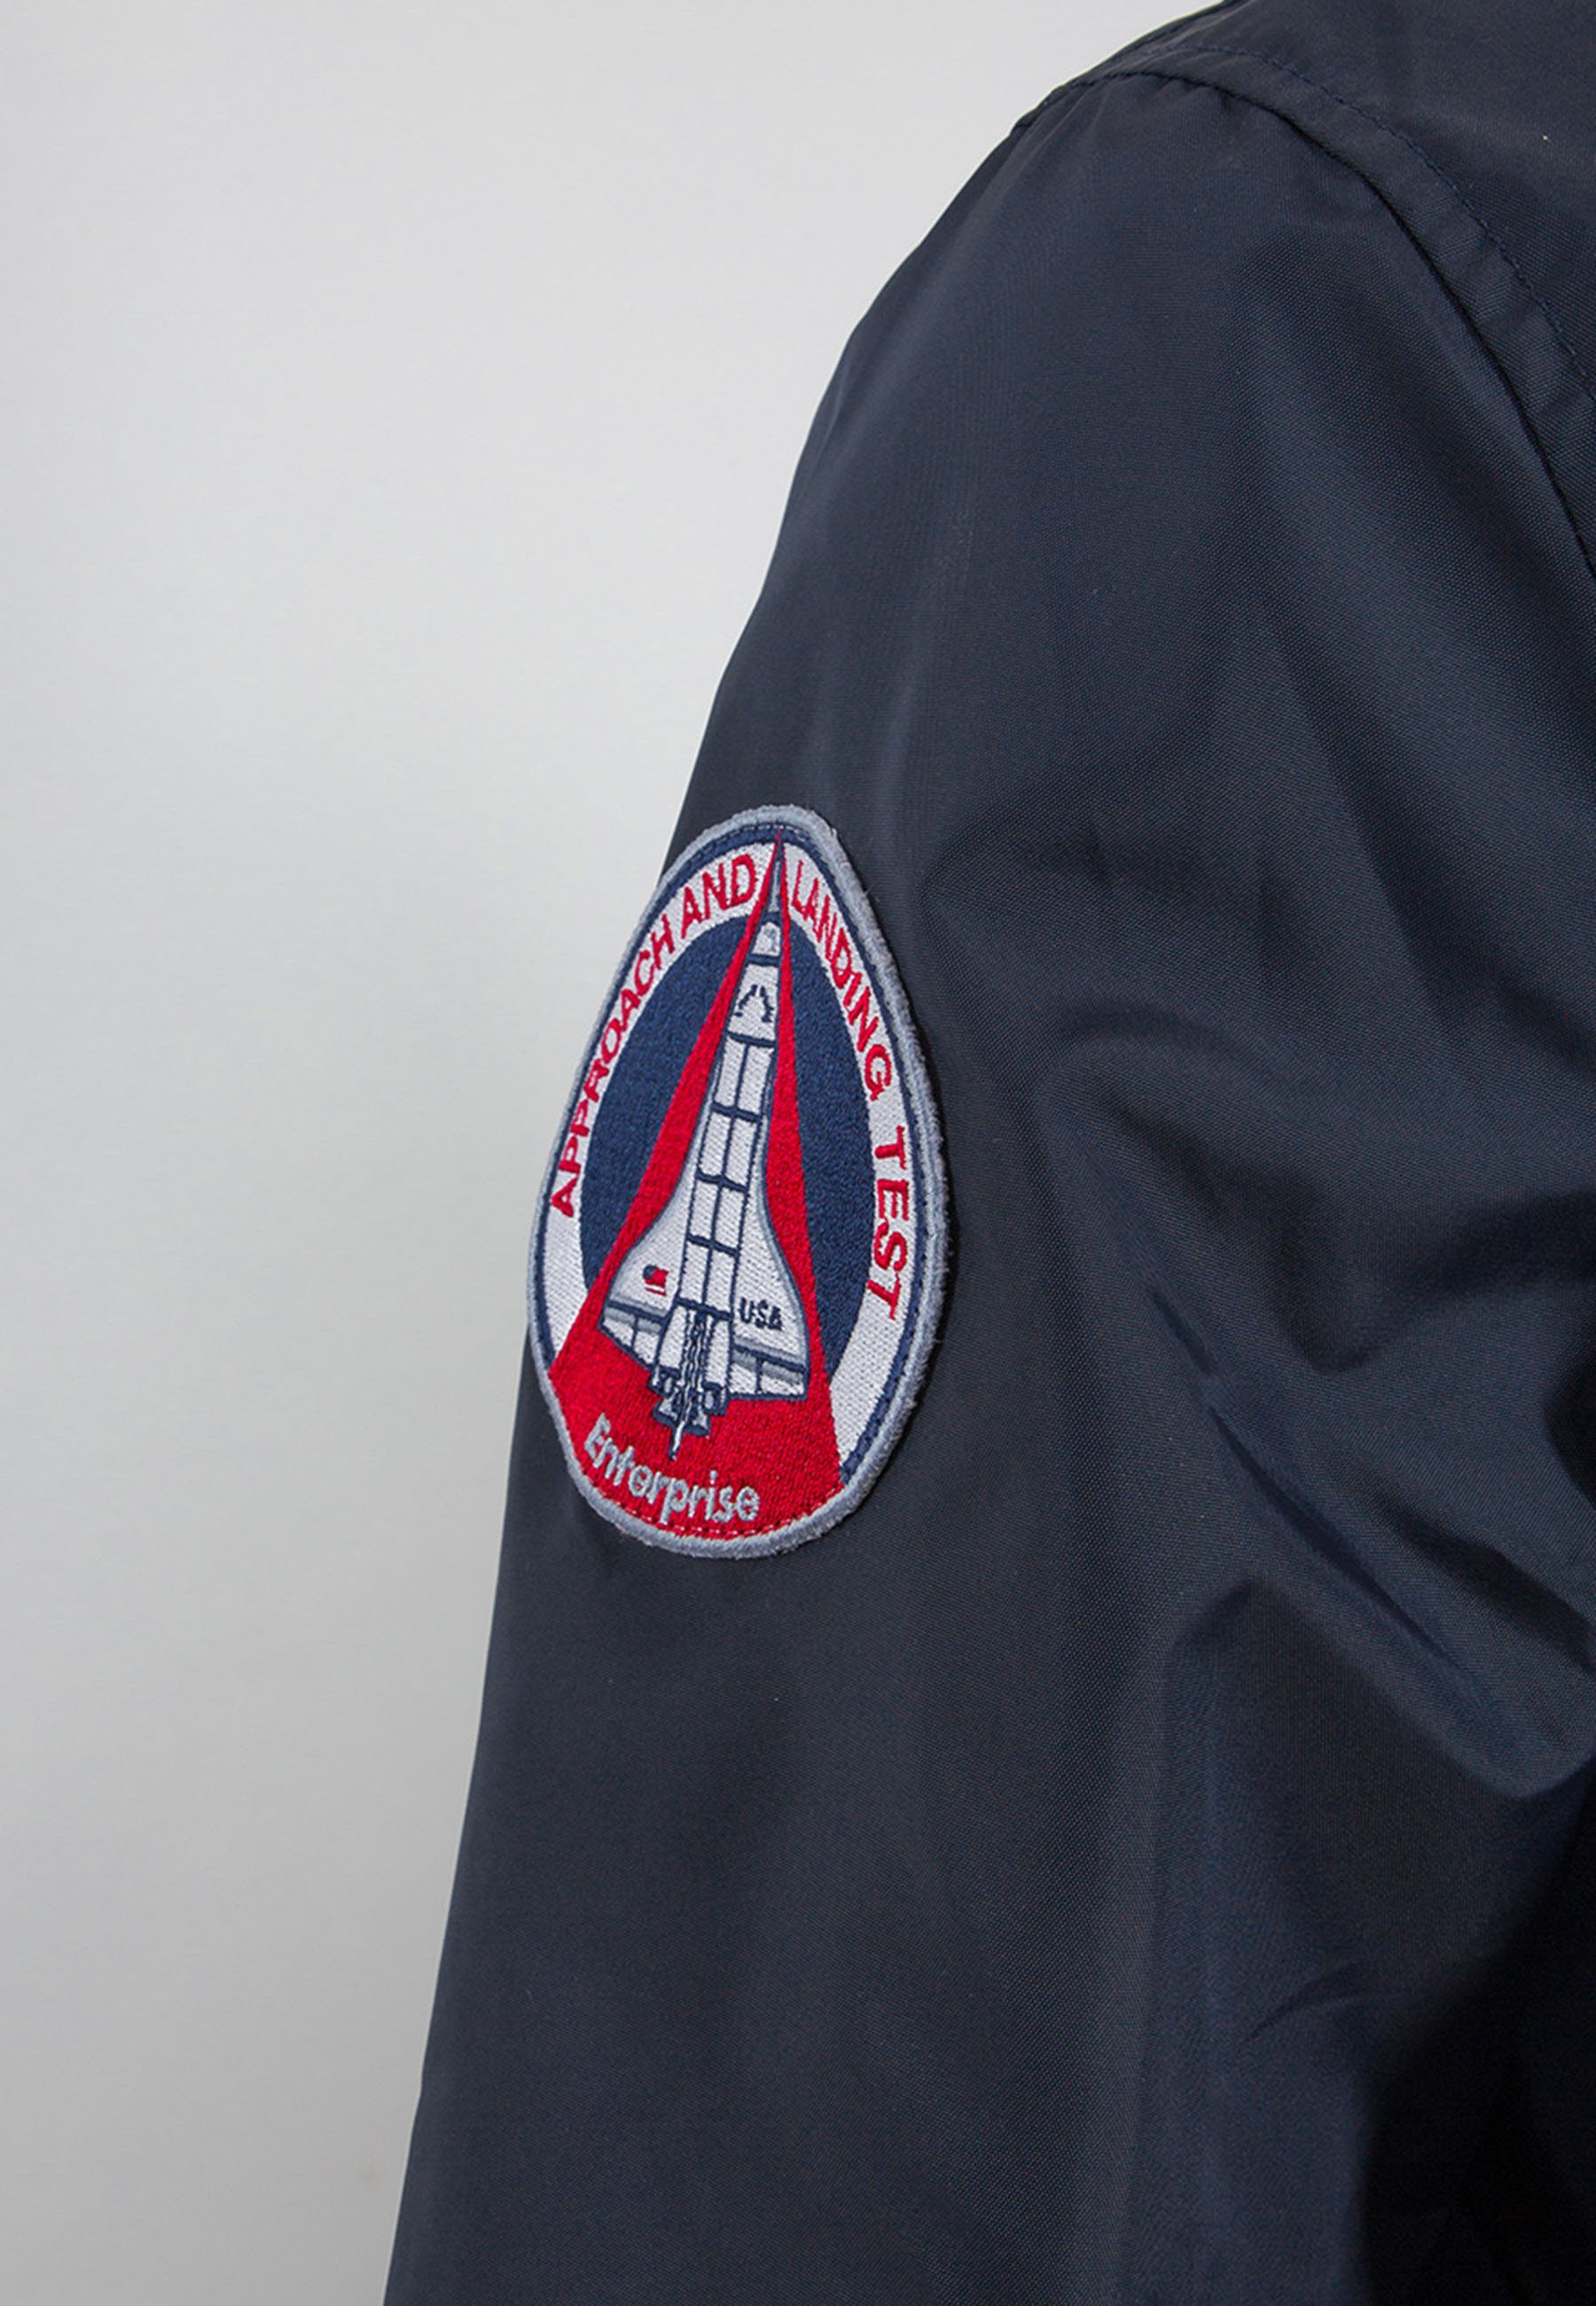 rep.blue Jackets Lightweight Alpha NASA Coach Industries Bomberjacke Men Alpha - Industries Jacket